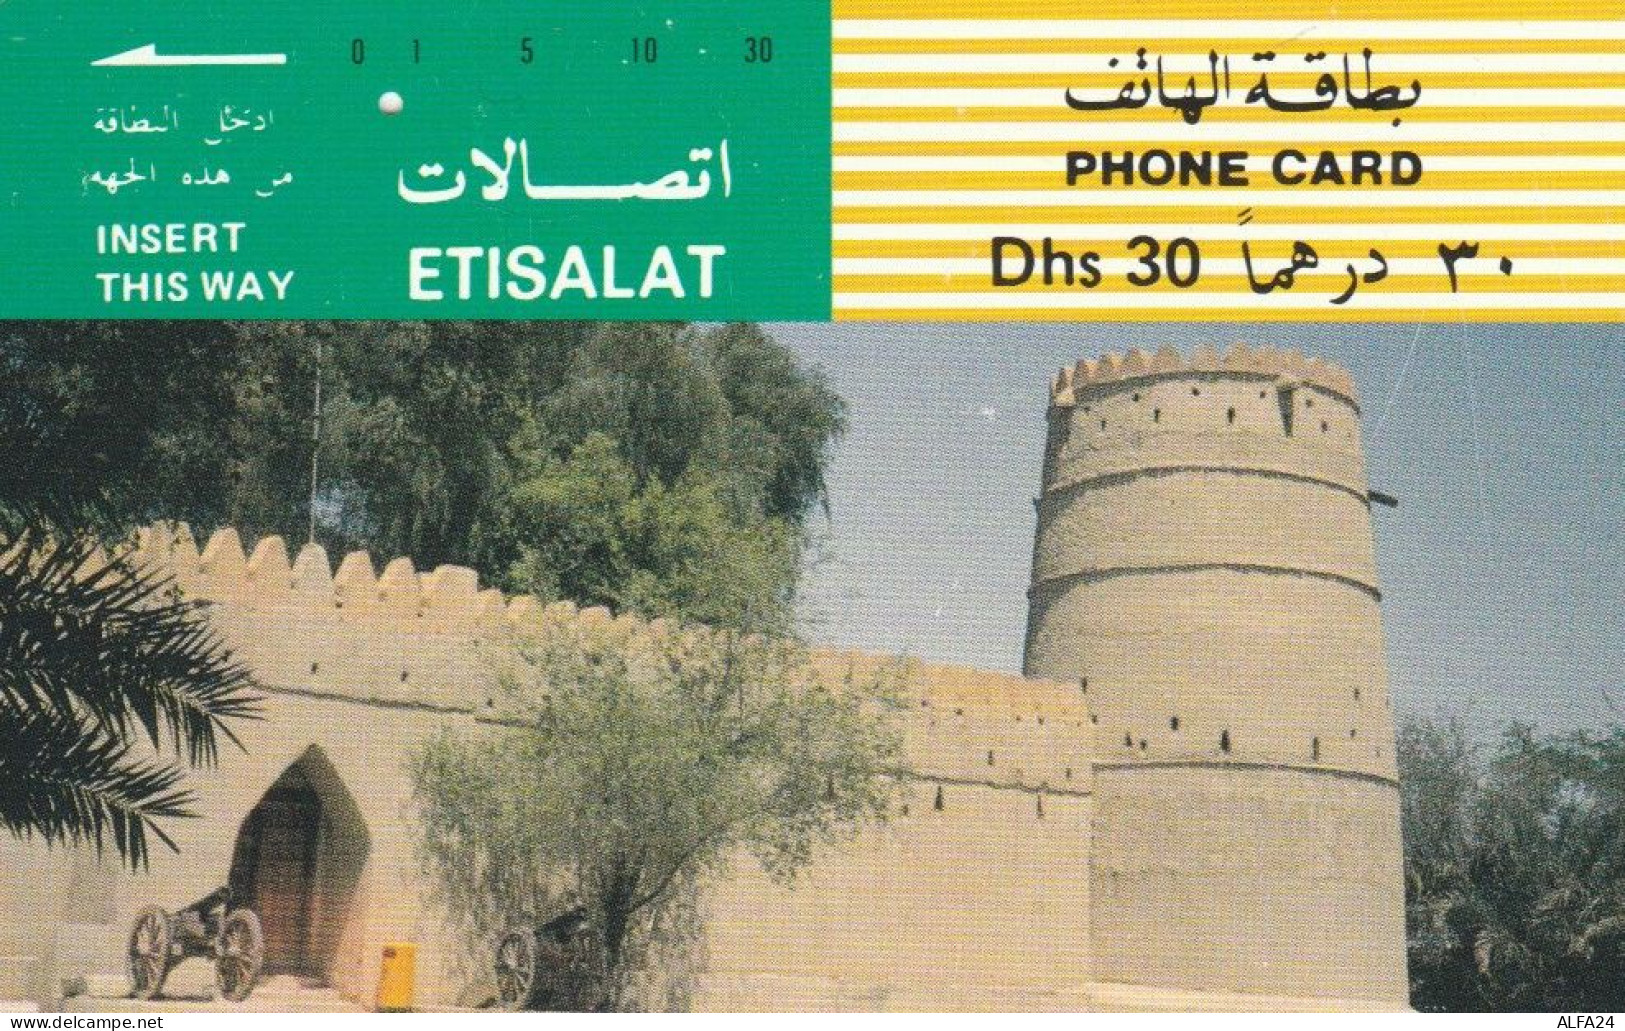 PHONE CARD EMIRATI ARABI (E53.15.8 - United Arab Emirates